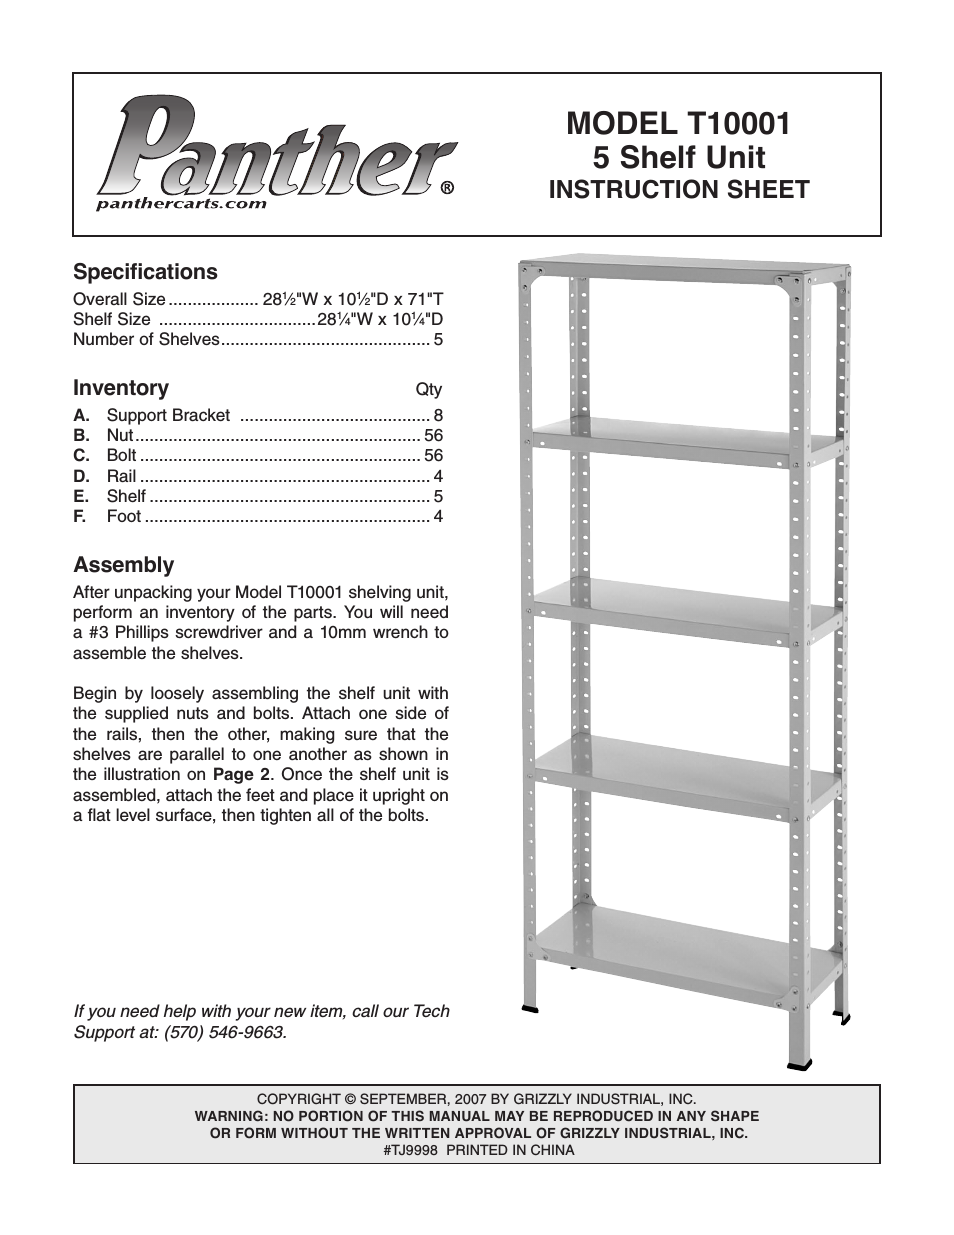 Panther 5 Shelf Unit T10001